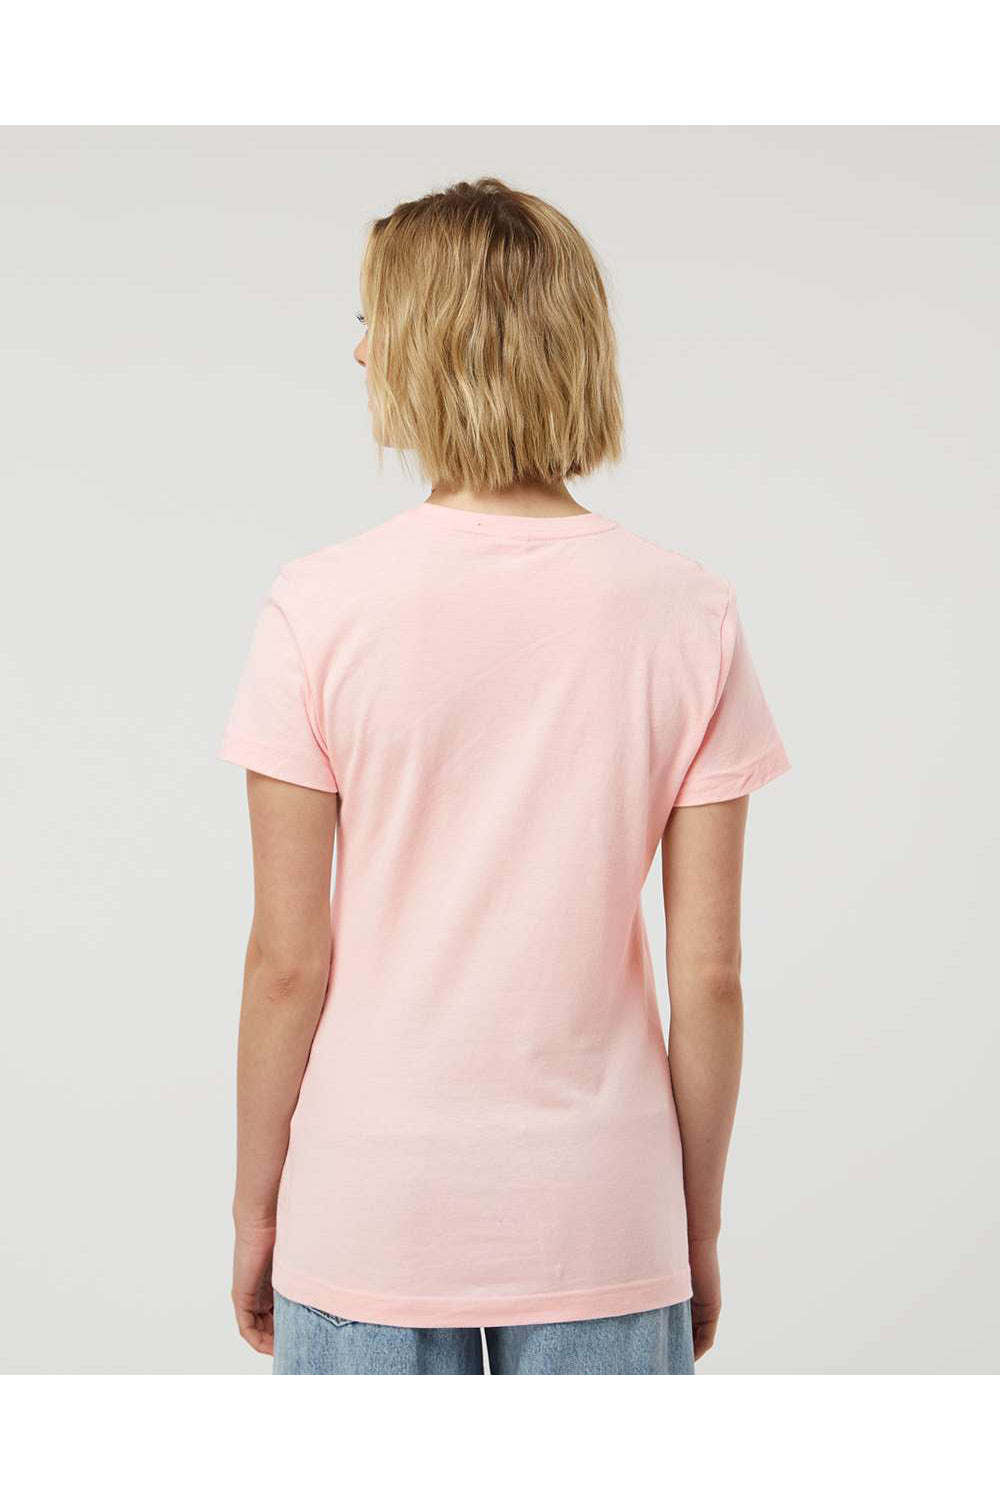 Tultex 216 Womens Fine Jersey Classic Fit Short Sleeve Crewneck T-Shirt Pink Model Back